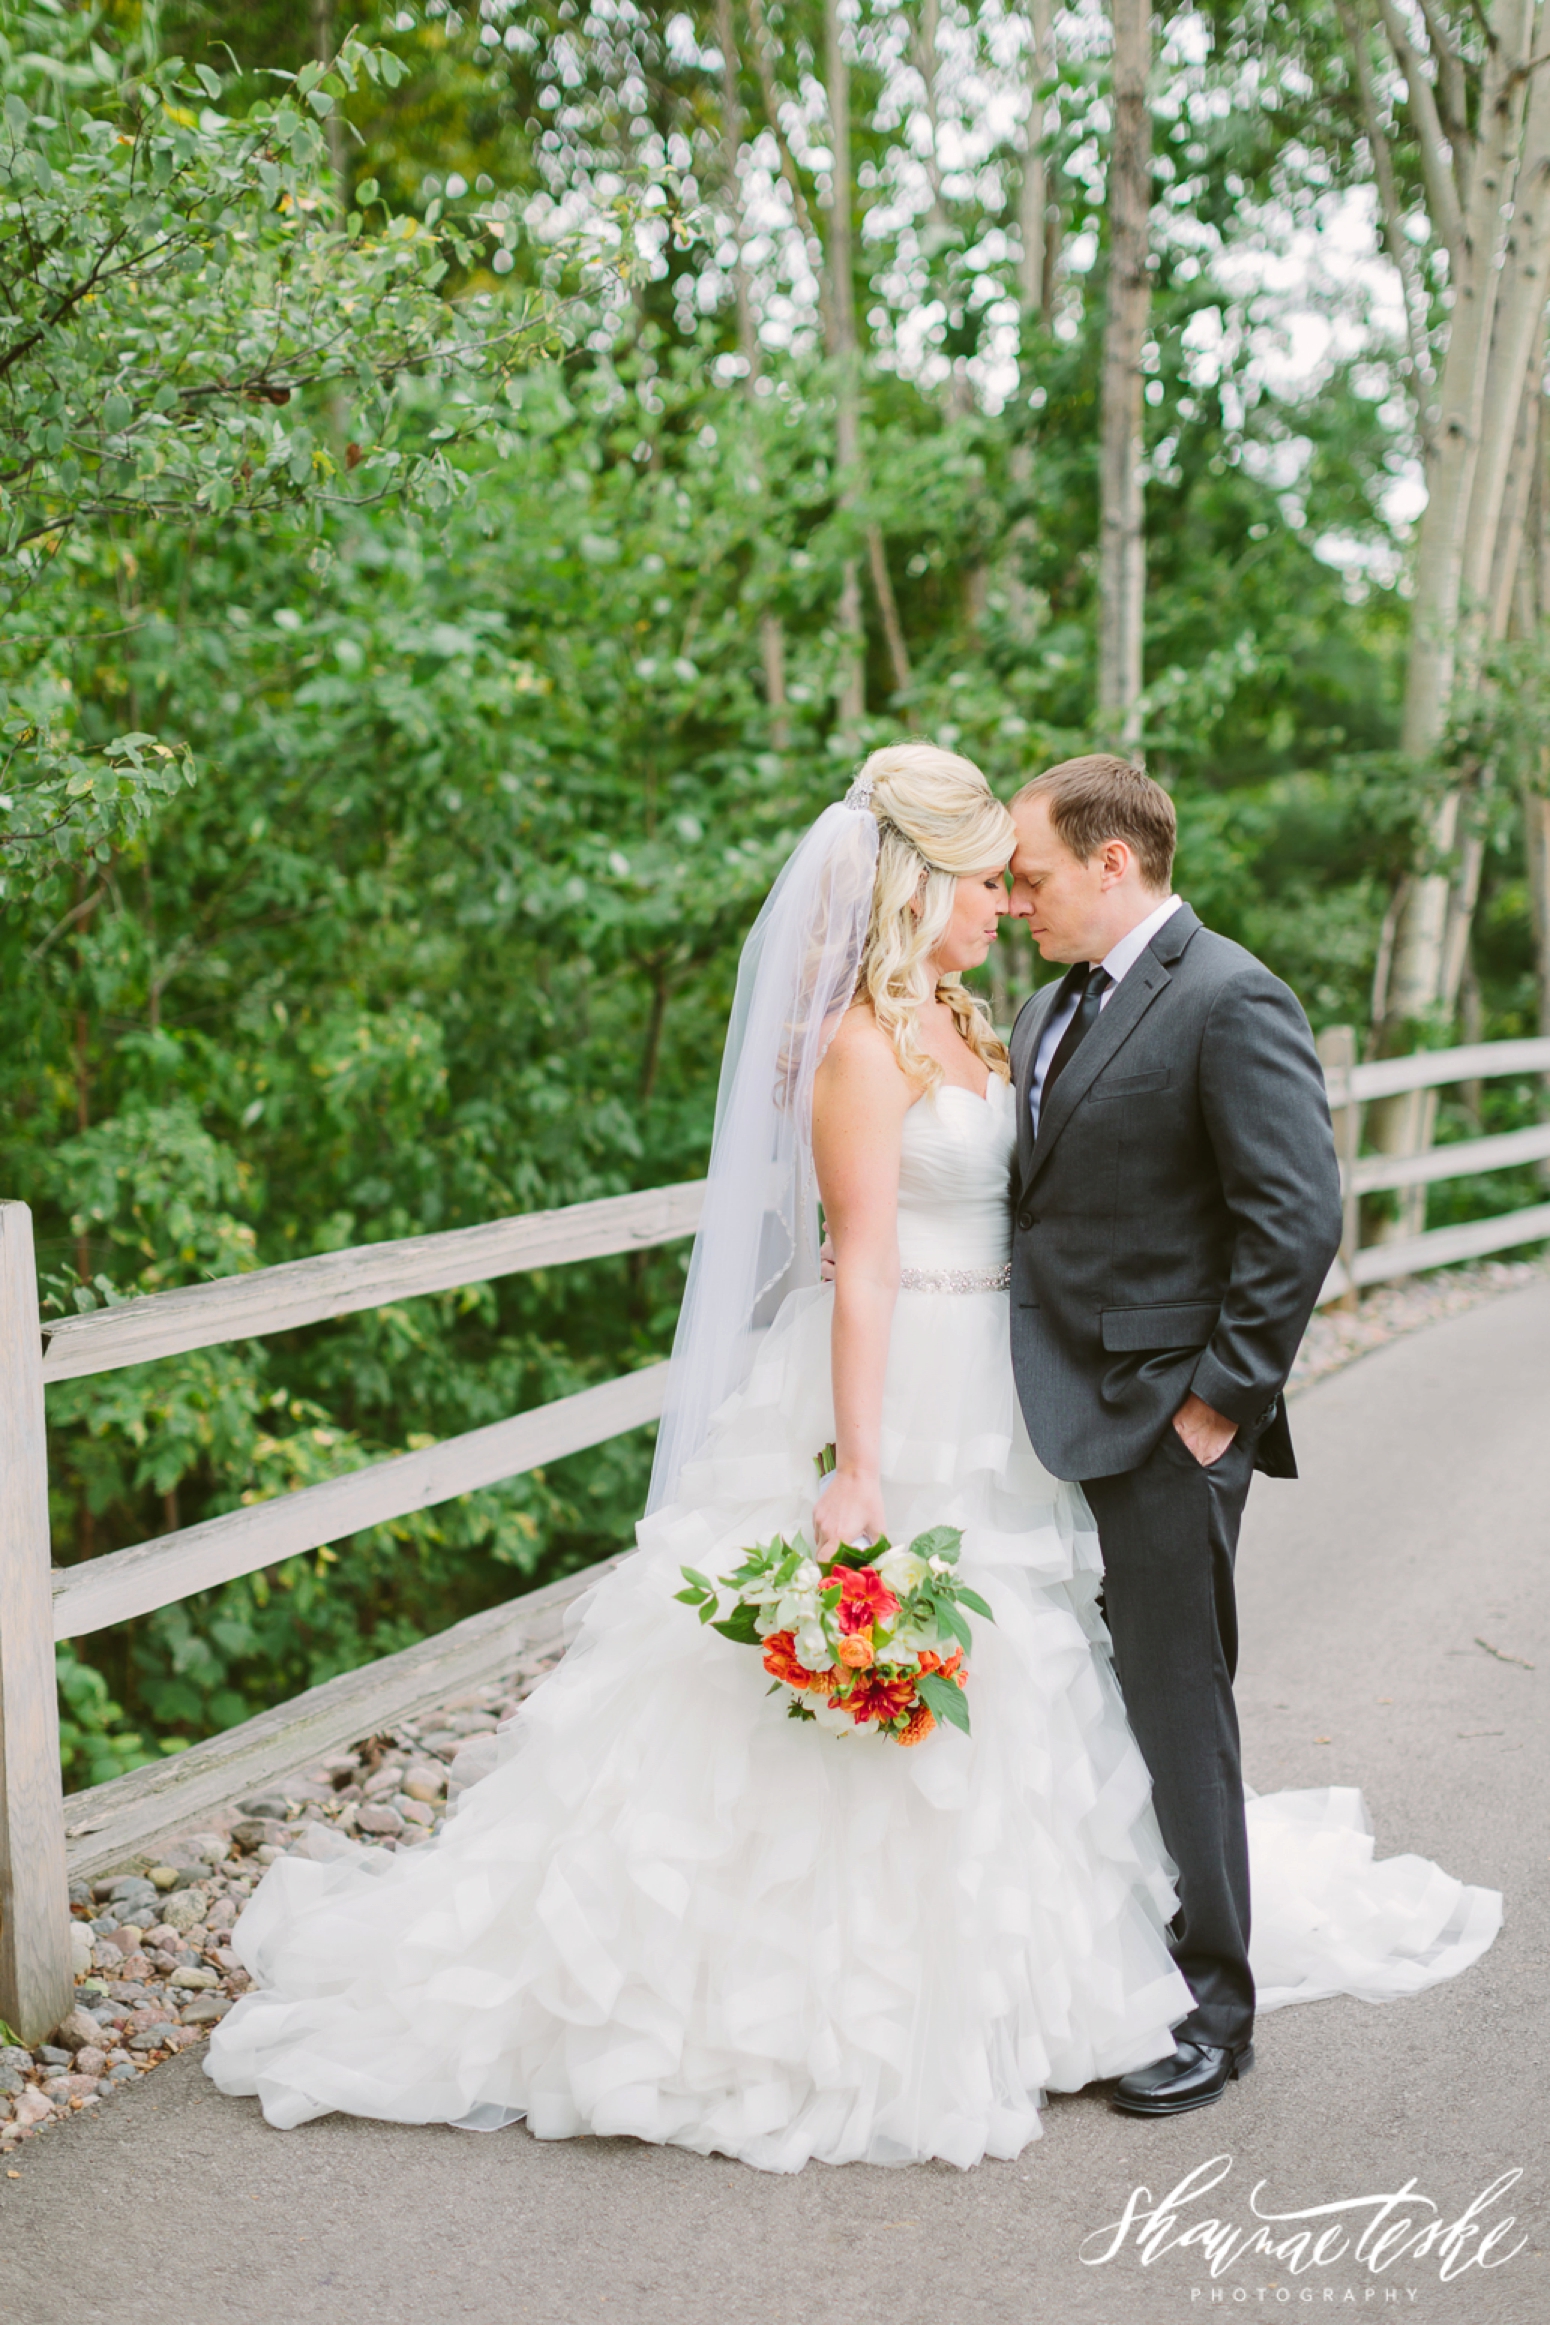 Danielle & Mike | Green Bay Botanical Garden Wedding - Shaunae Teske ...